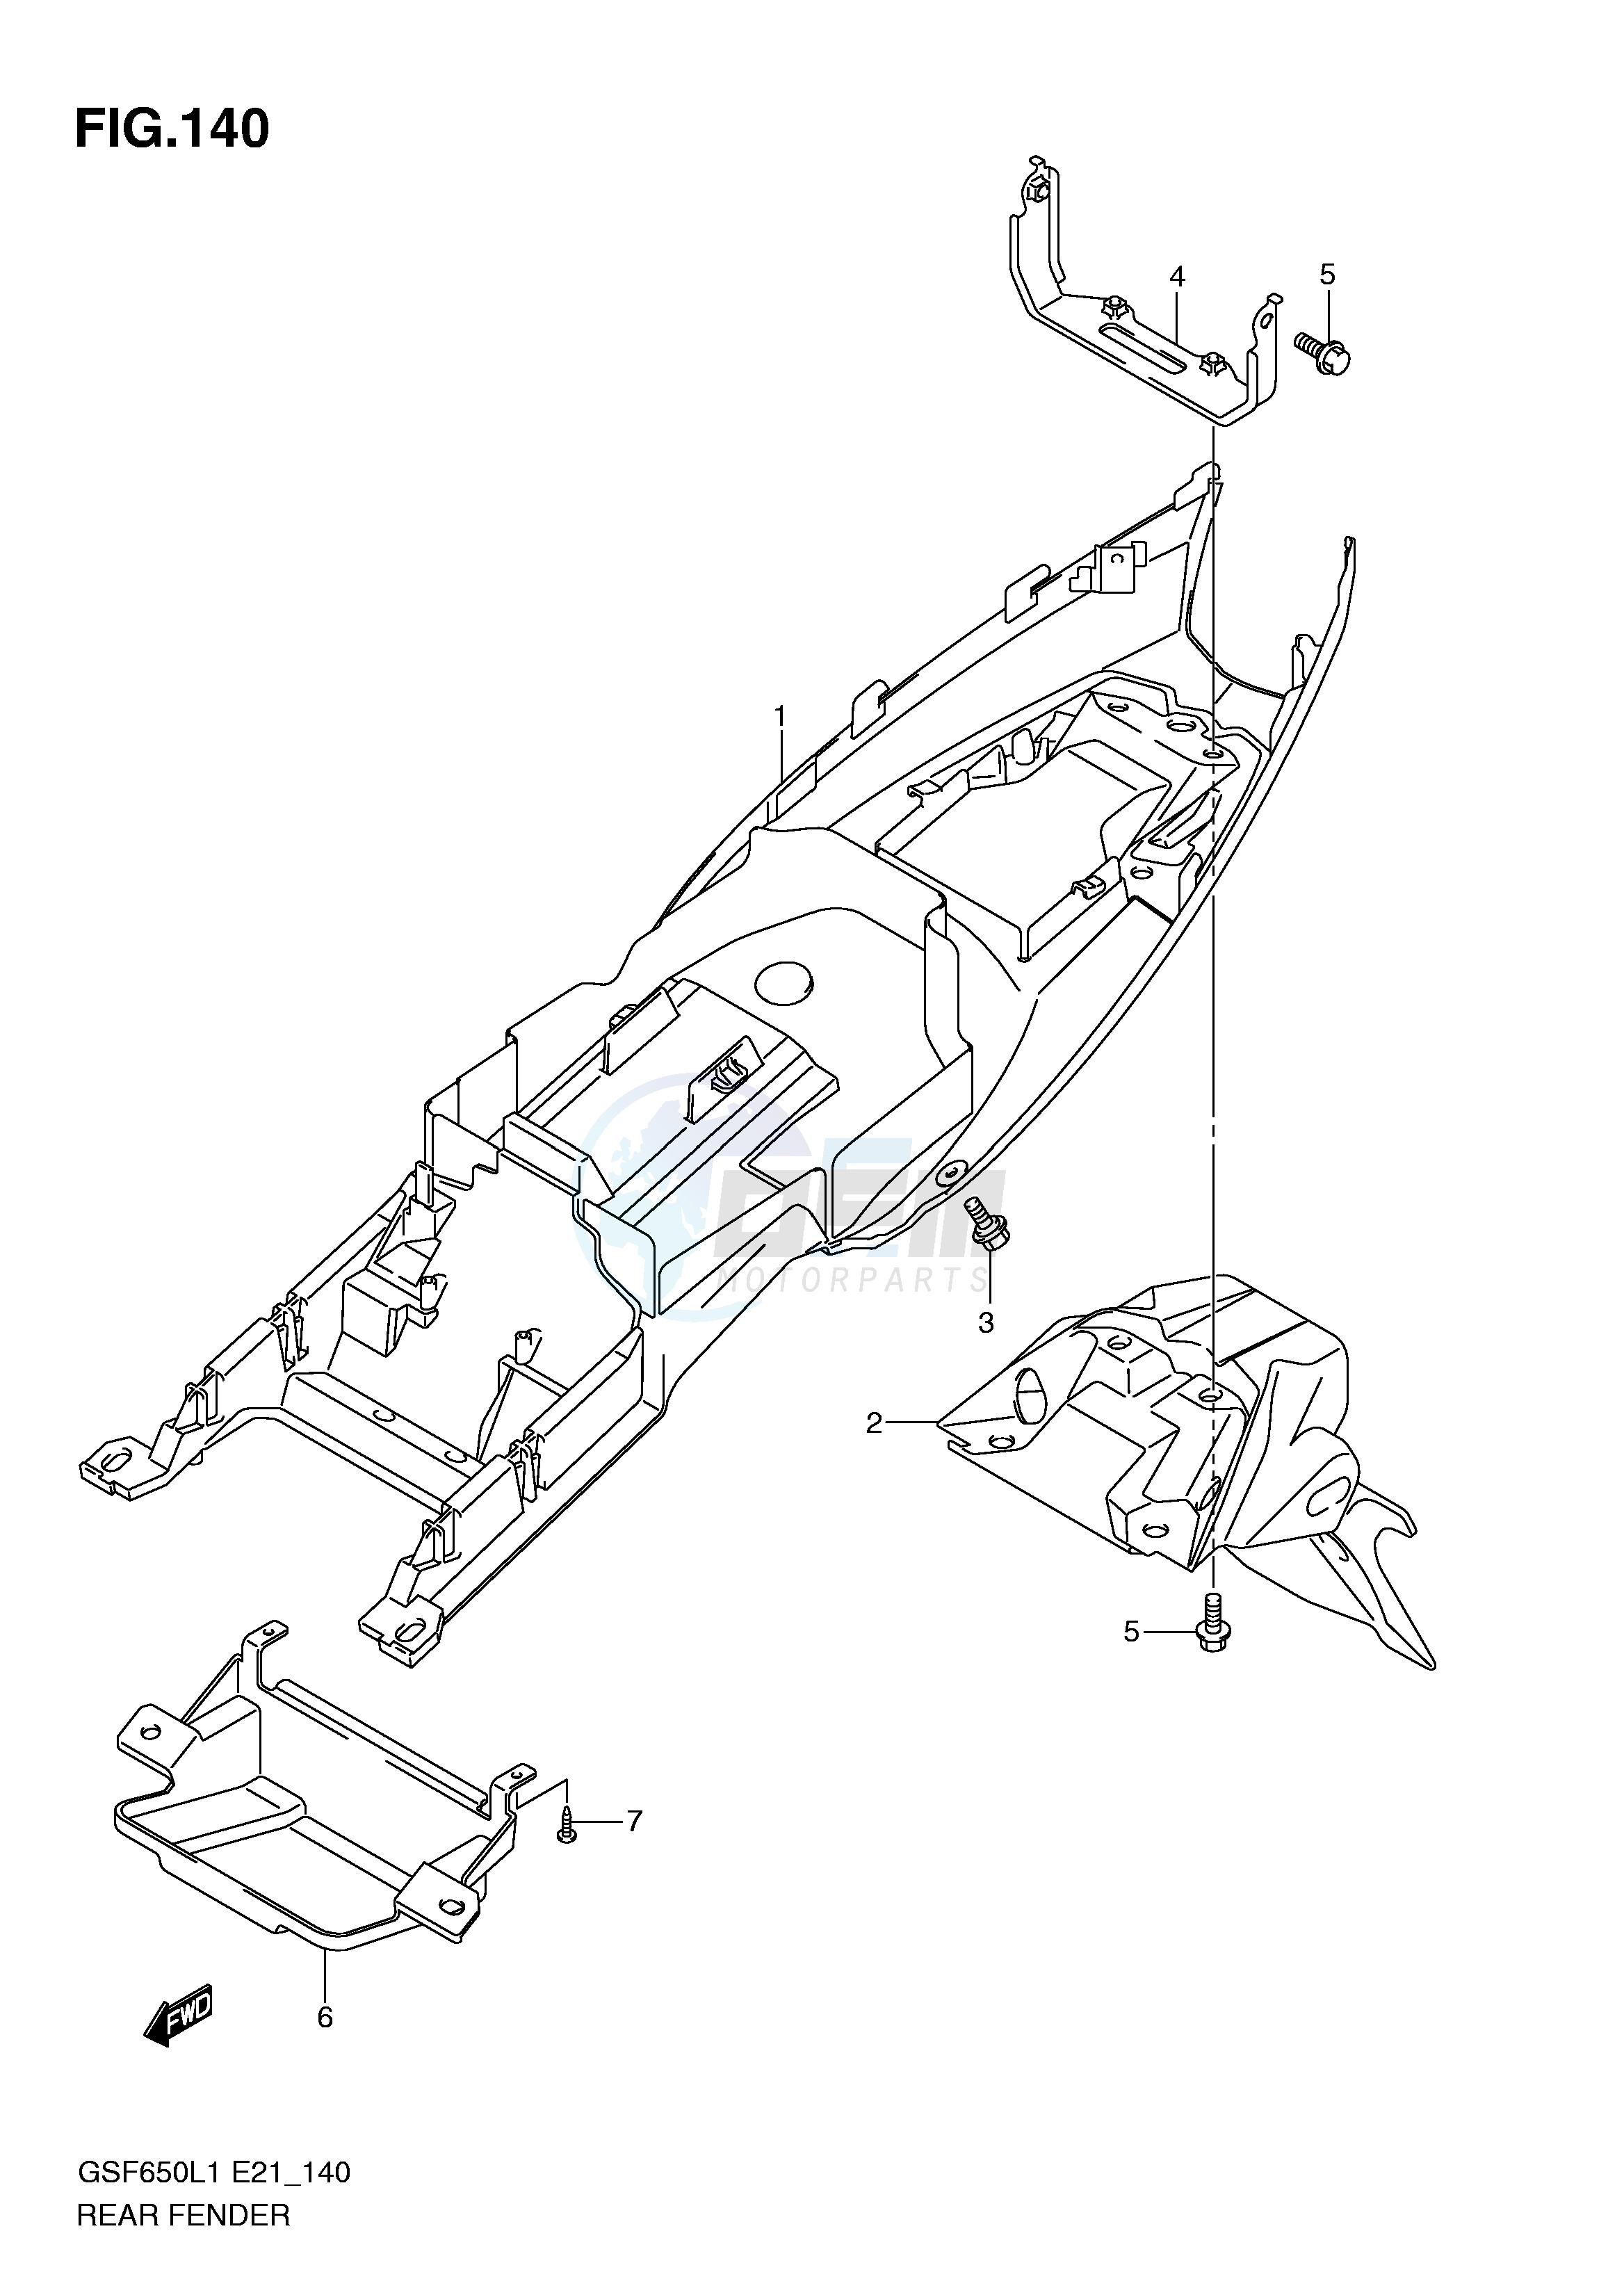 REAR FENDER (GSF650SUL1 E21) blueprint